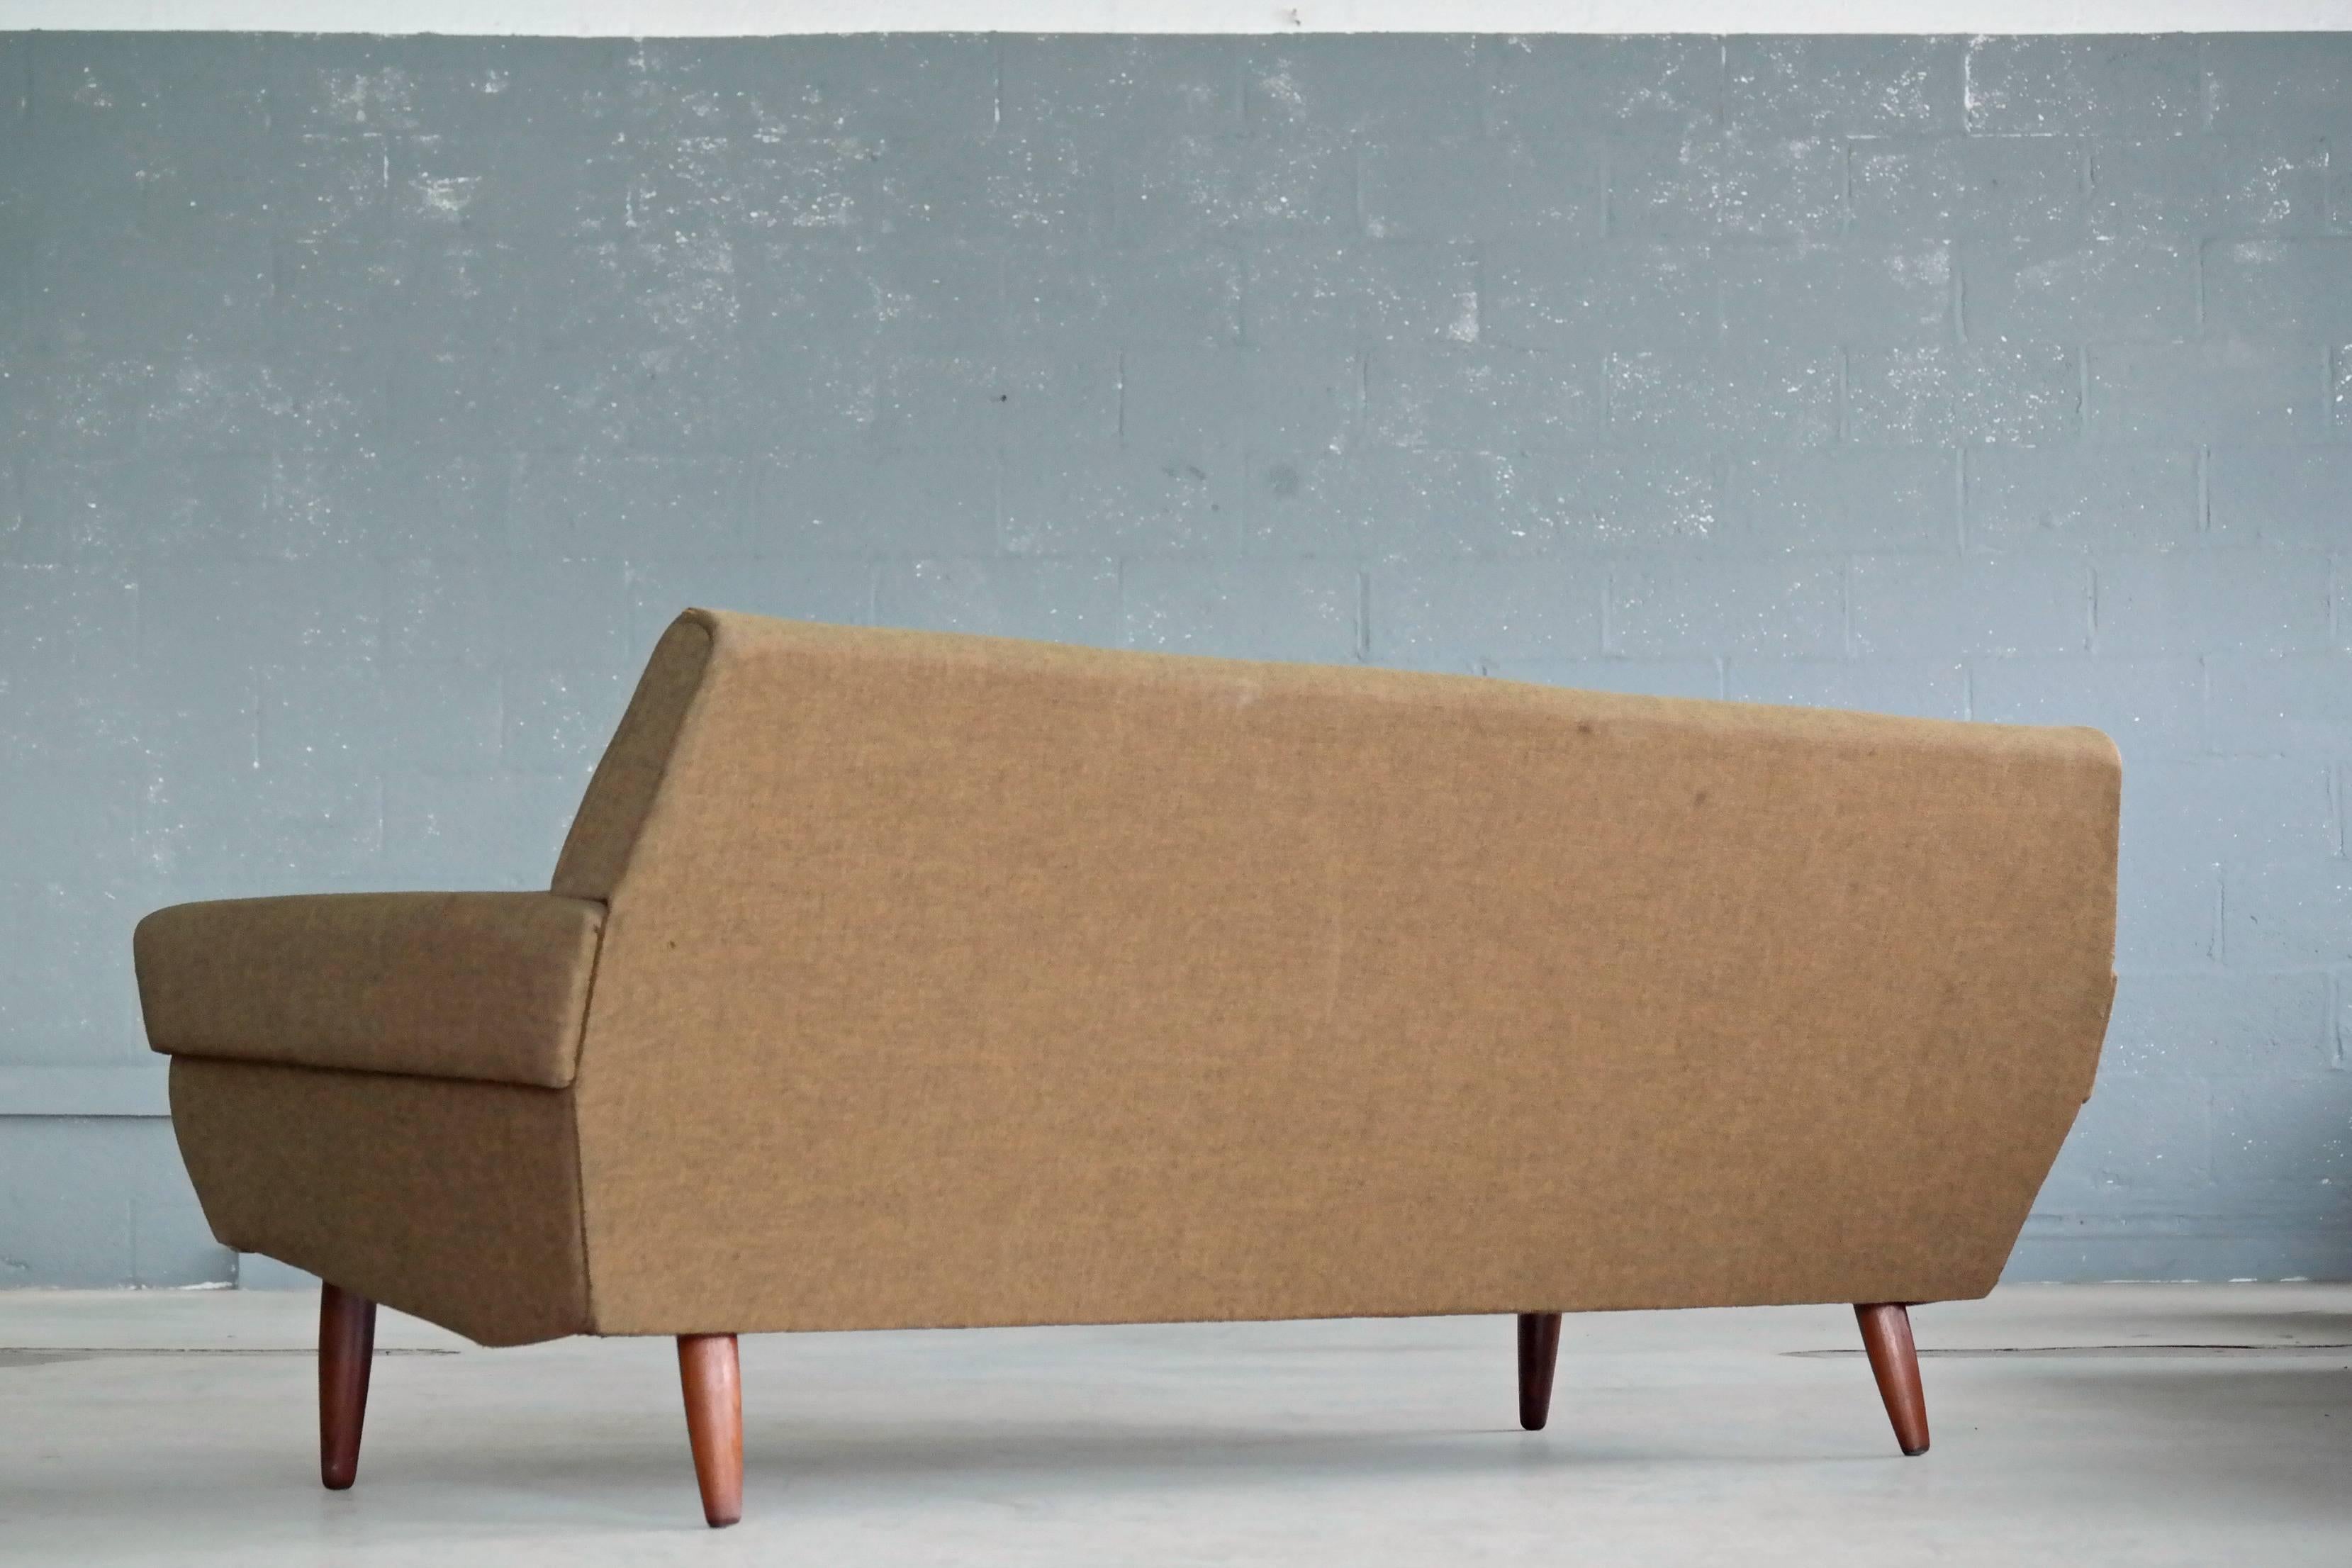 Danish Midcentury Sofa in the style of Kurt Ostervig 1